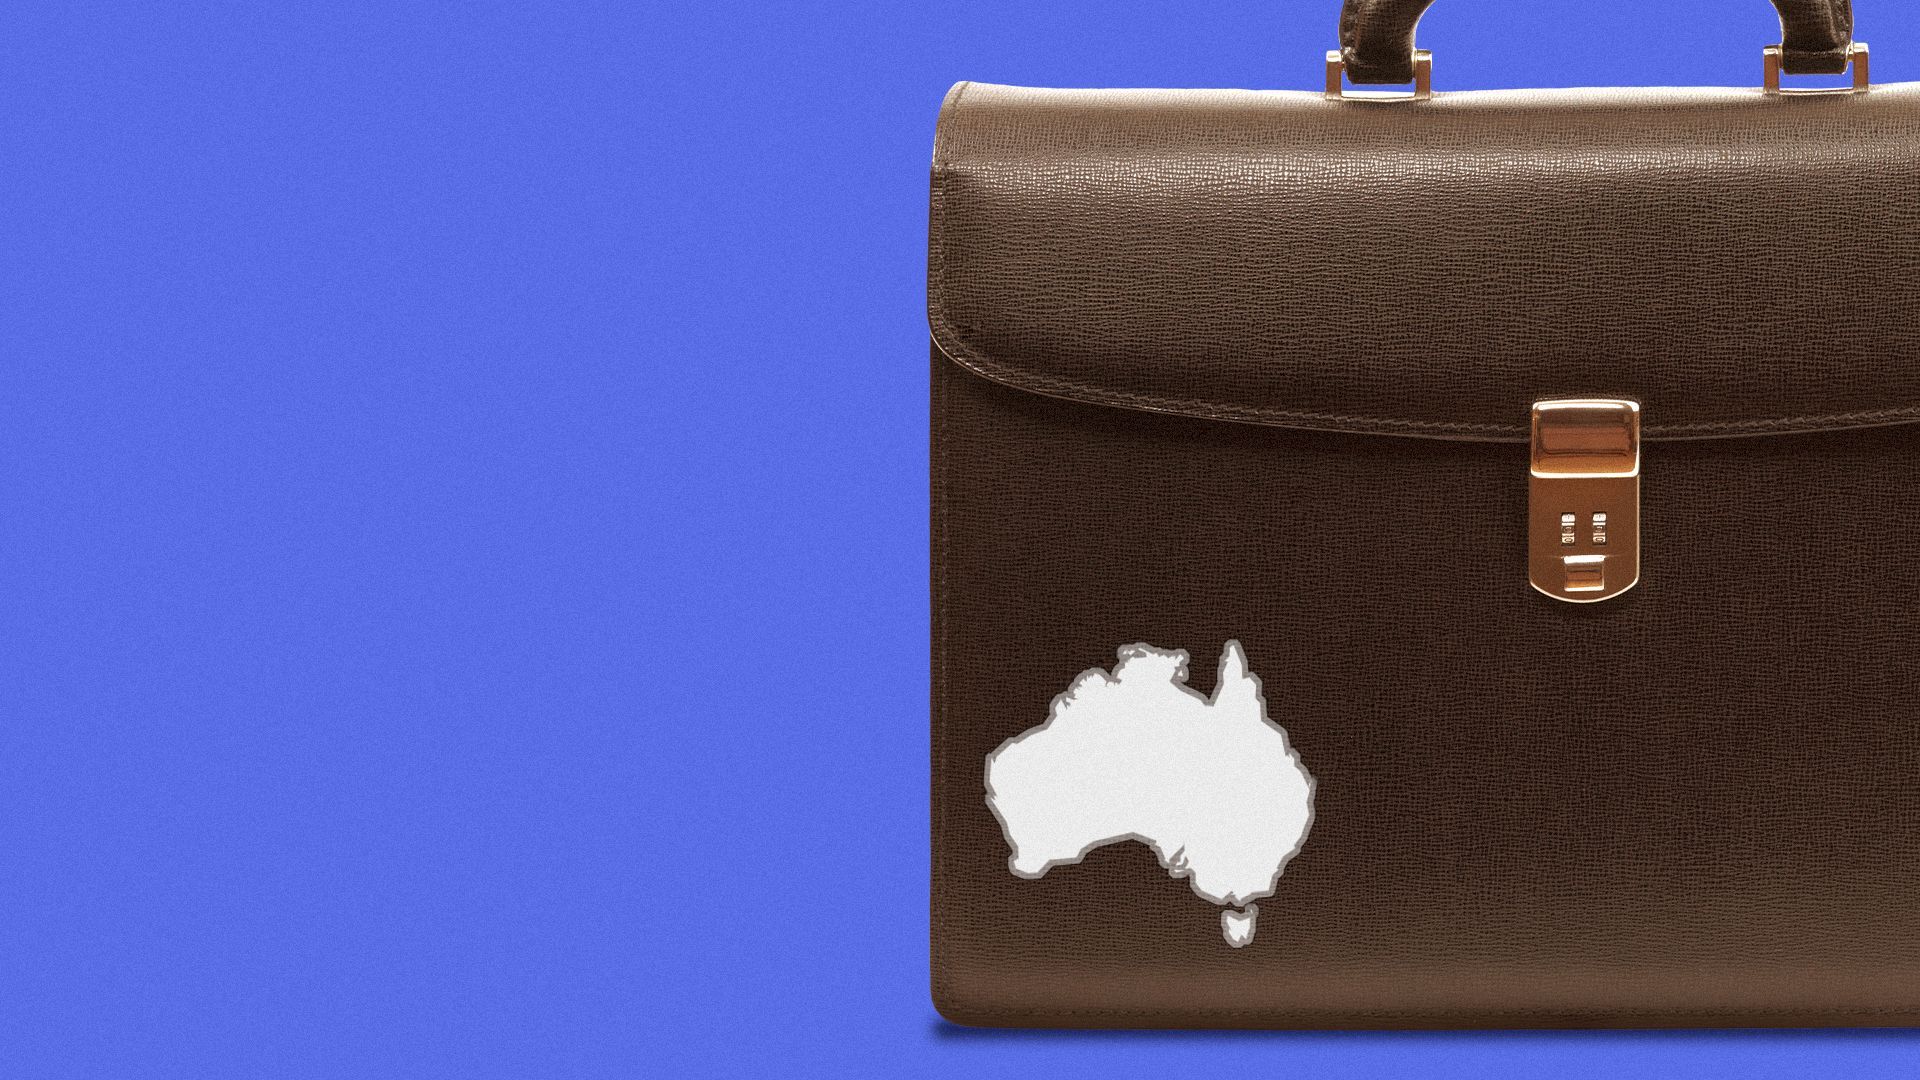 Illustration of an Australia sticker on a briefcase.